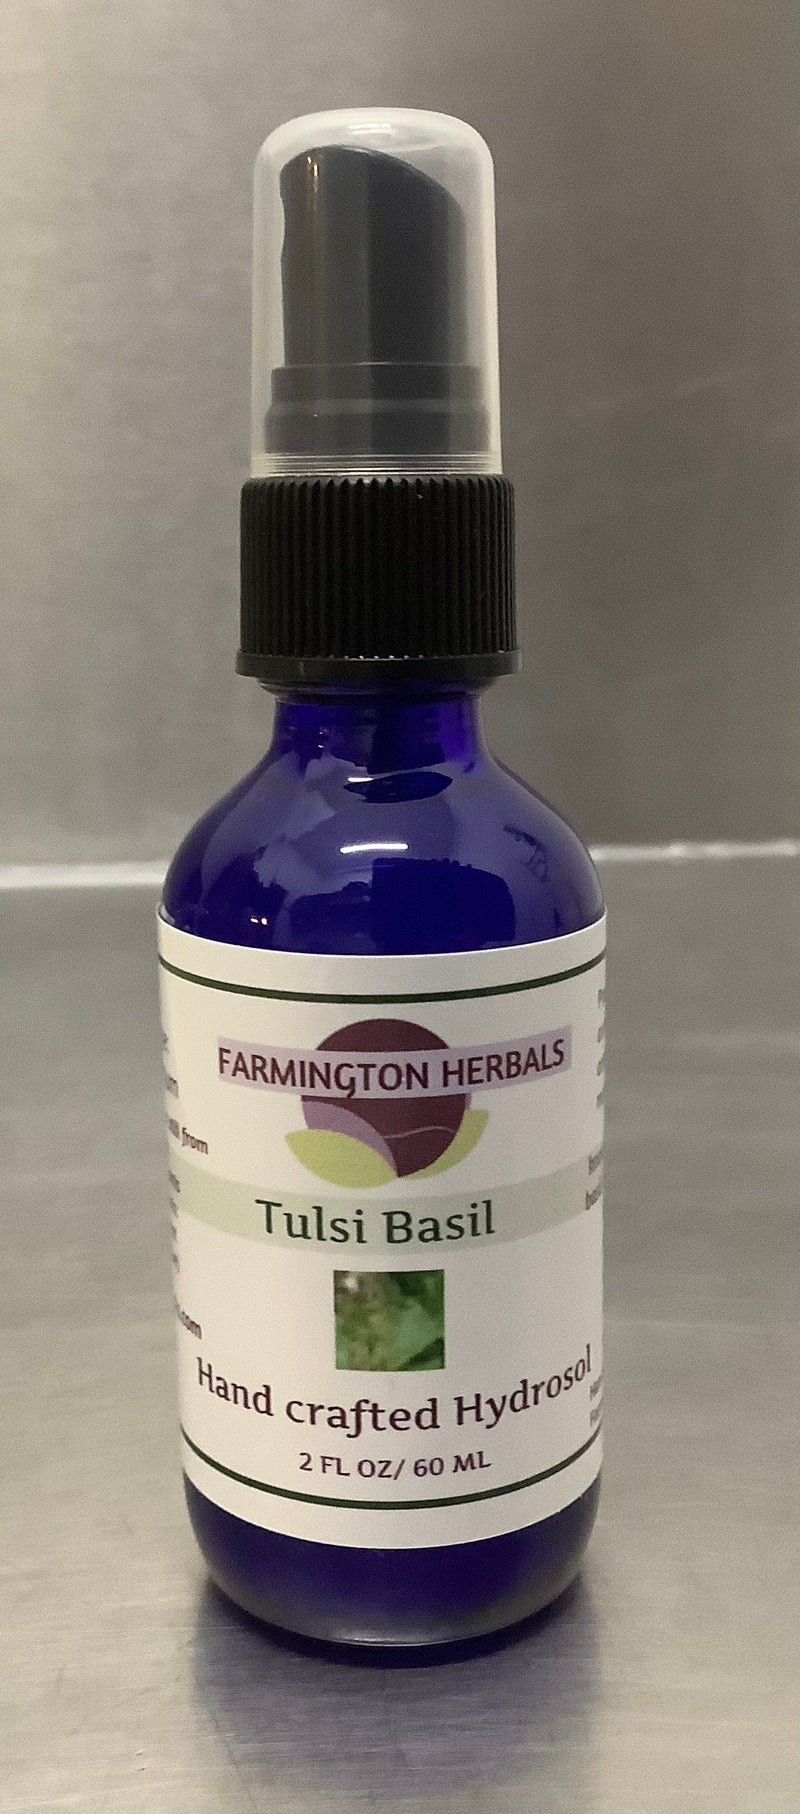 Tulsi (Holy Basil) Handcrafted Hydrosol – Farmington Herbals